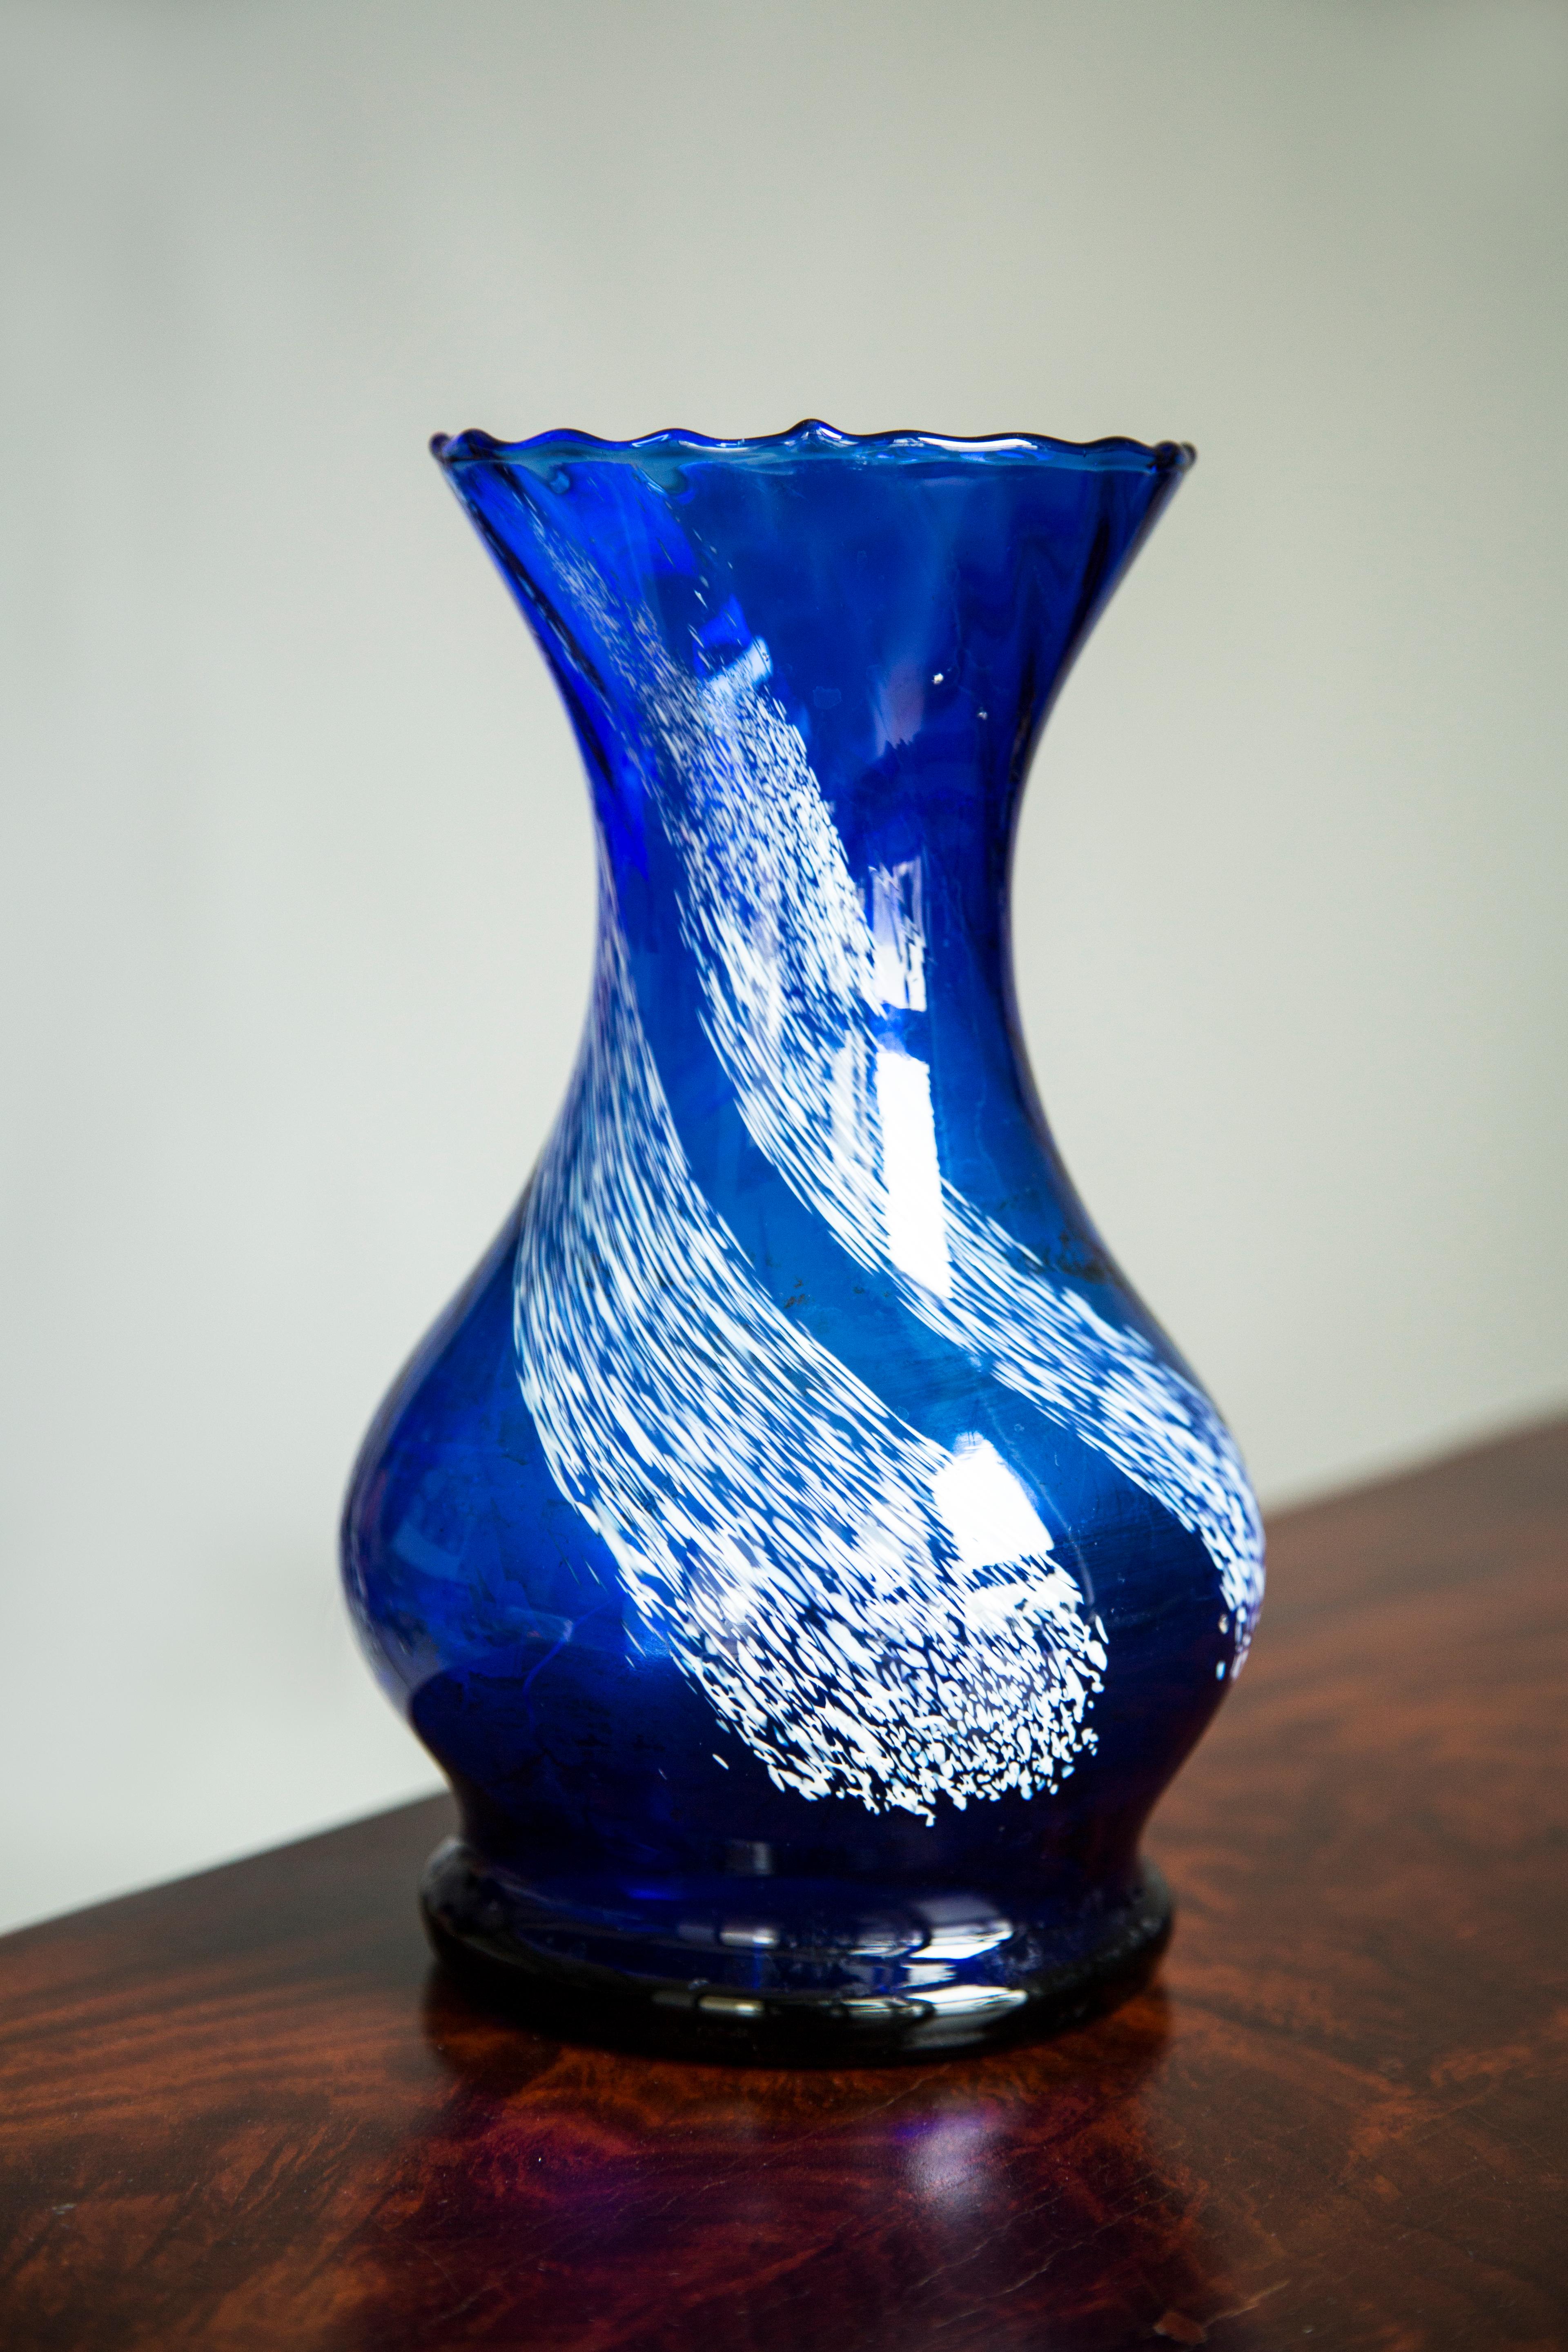 VASE “Frill”
Author: Decorative Glassworks 